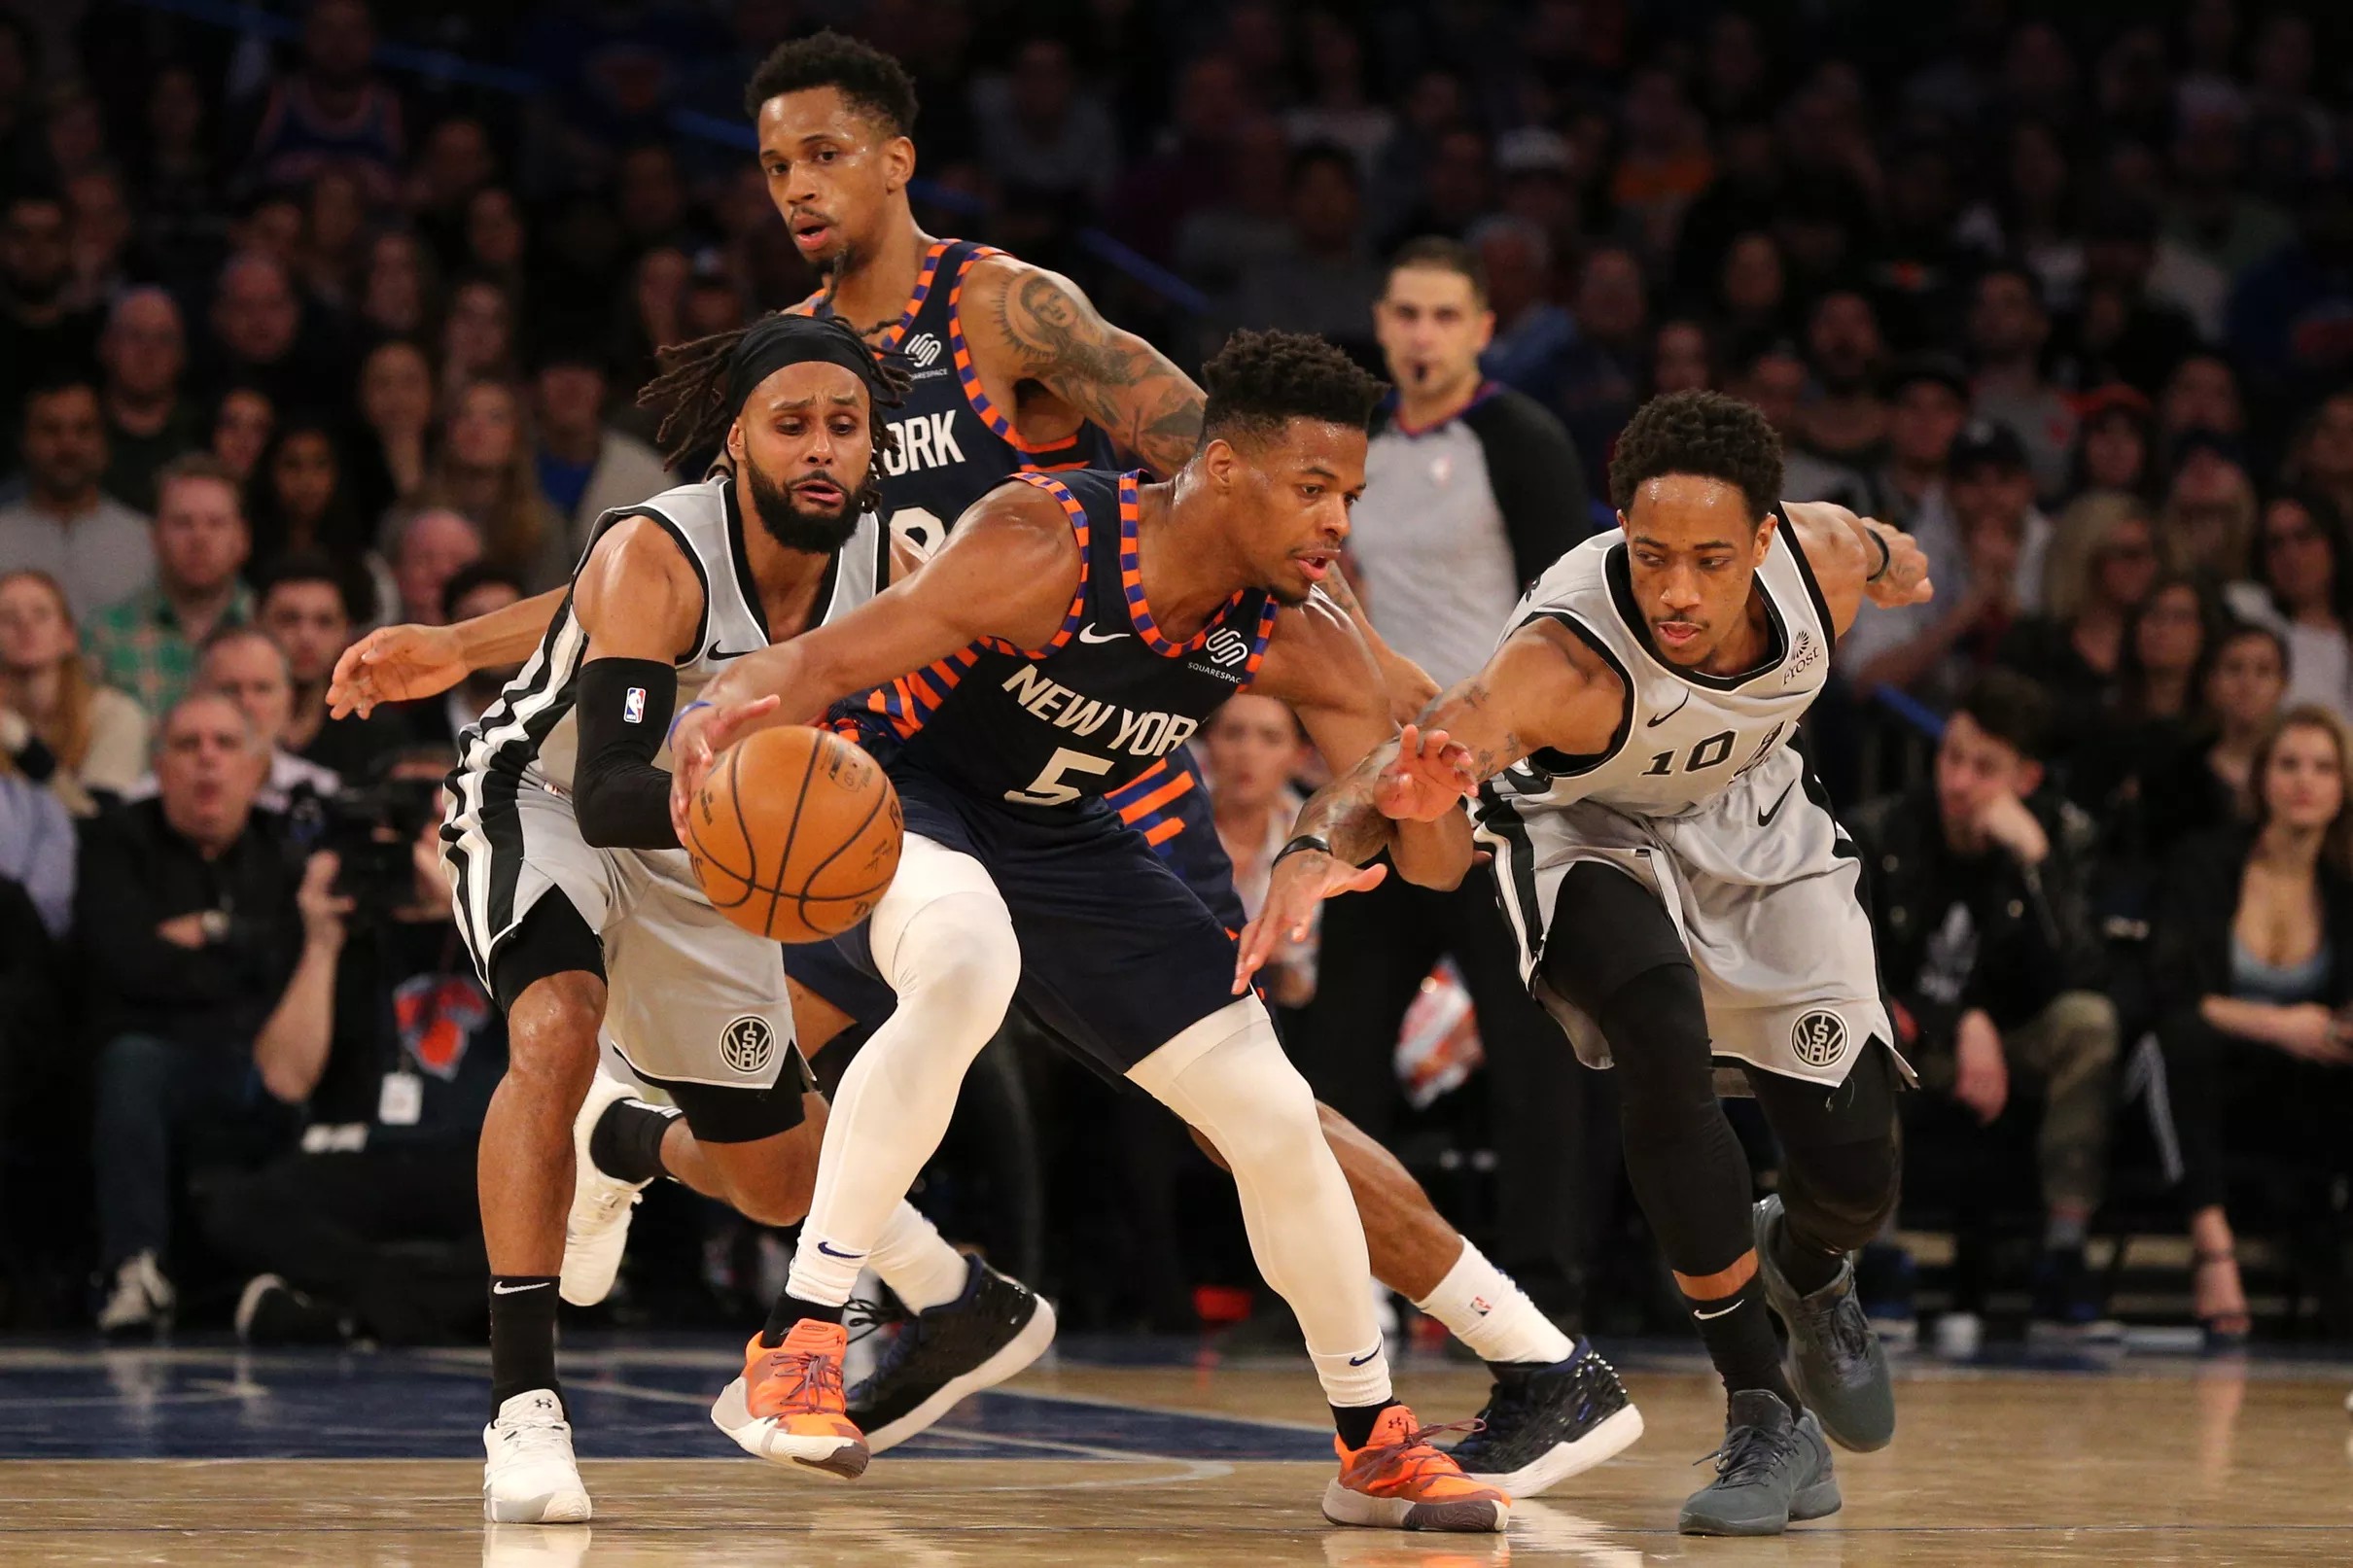 It’s time for Spurs vs. Knicks